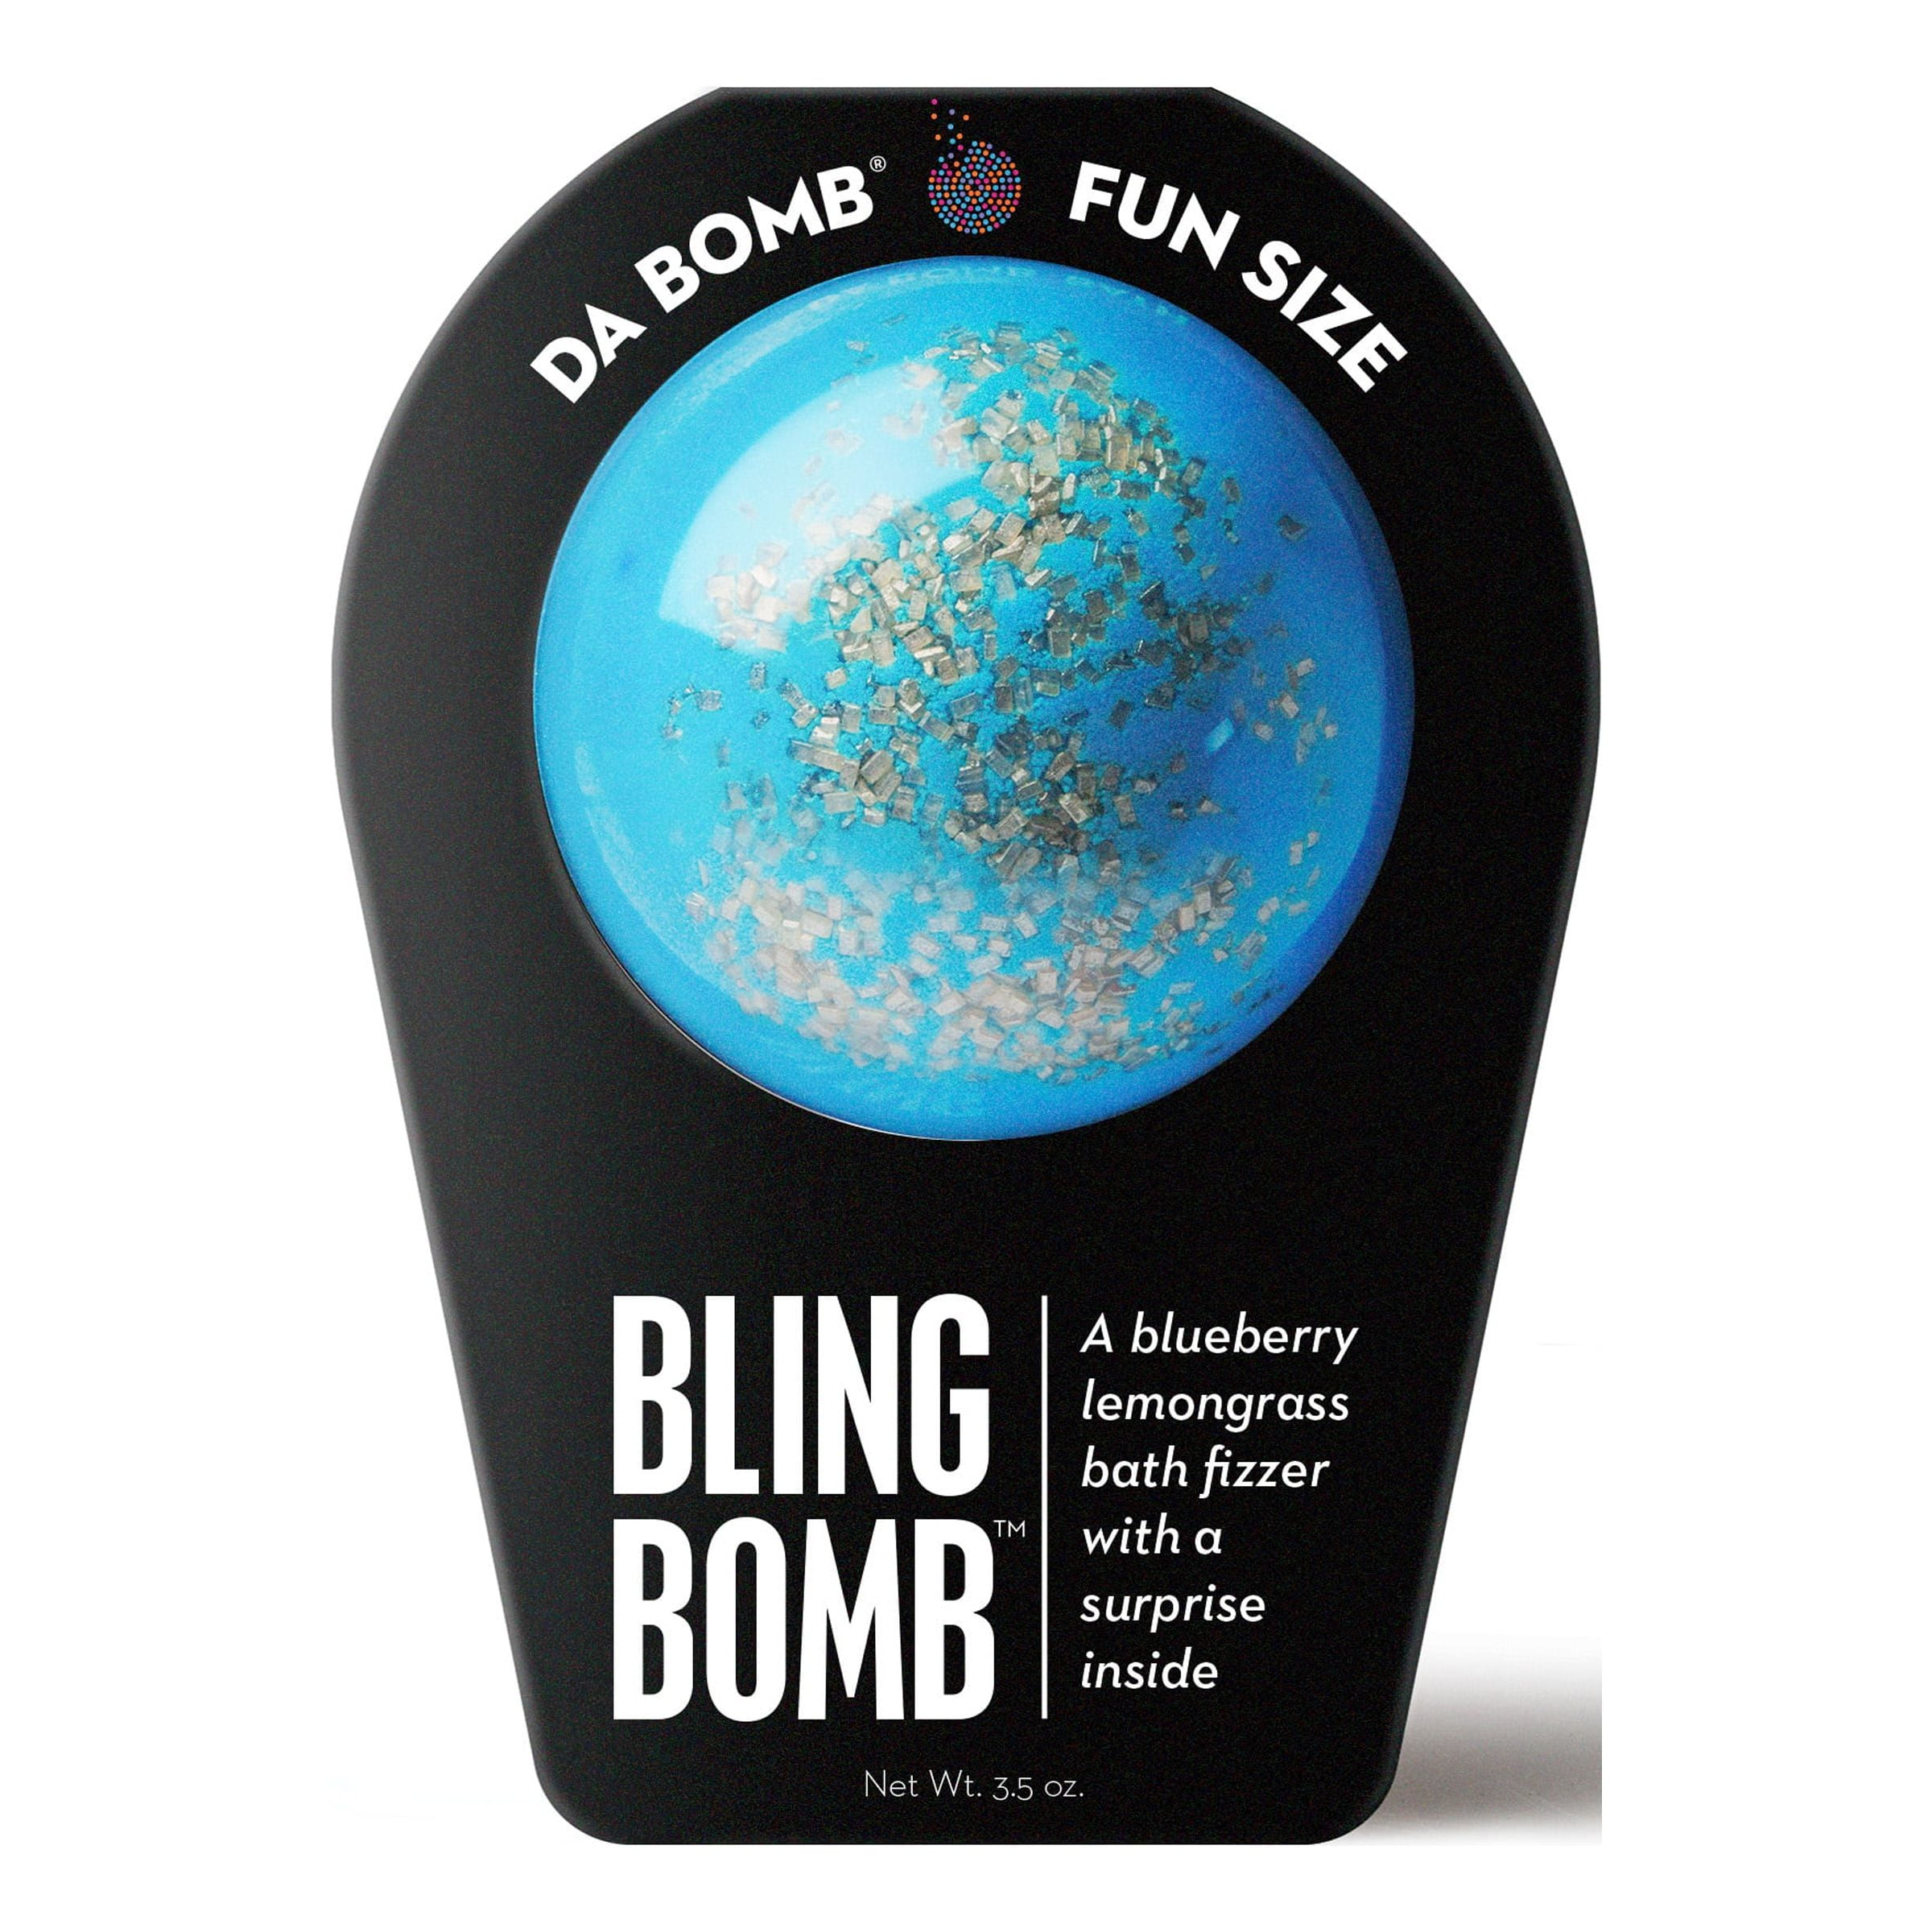 50 bulk POKE-MON Bath Bombs with Surprise Poke-mon Mini-figures